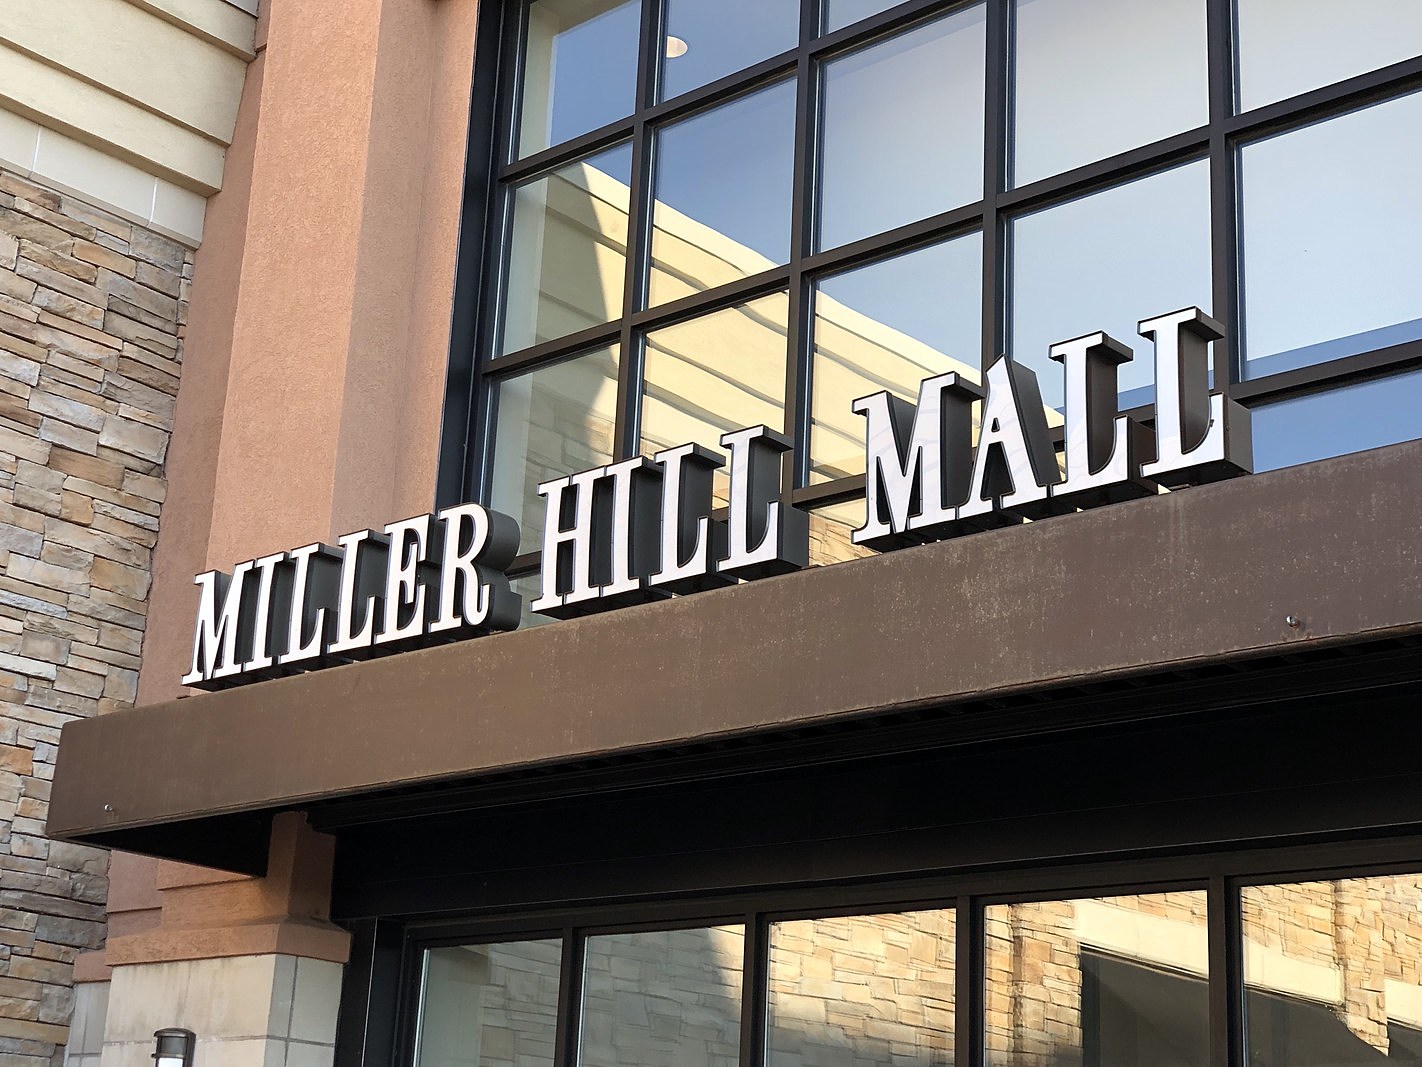 The Mall #2  Mall, City trip, Short hills mall